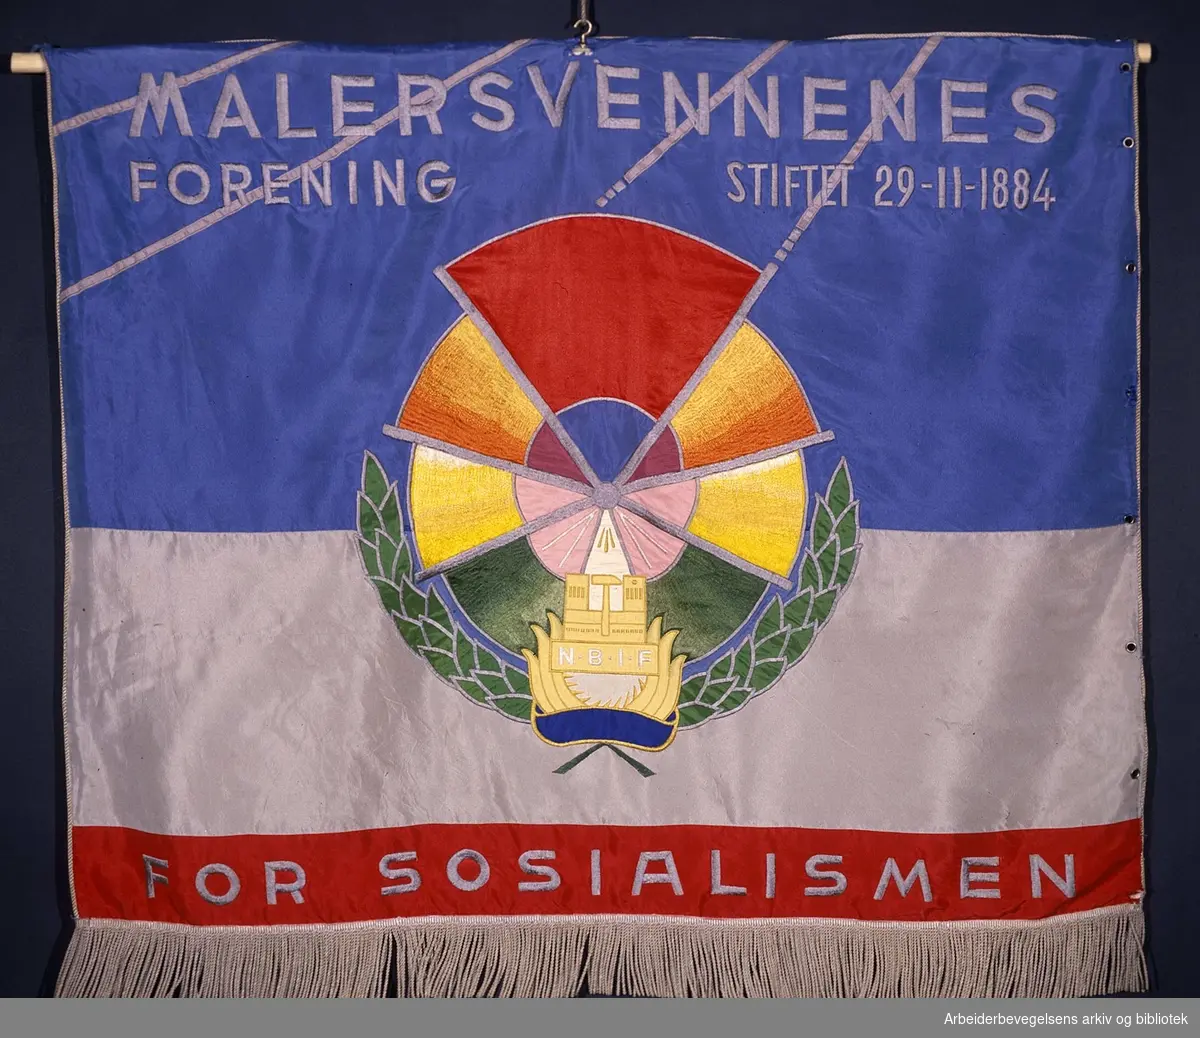 Malersvennenes forening, Oslo.Stiftet 29. november 1884..Forside..Fanetekst: Malersvennenes forening.Stiftet 29 - 11 - 1884.NBIF.For sosialismen